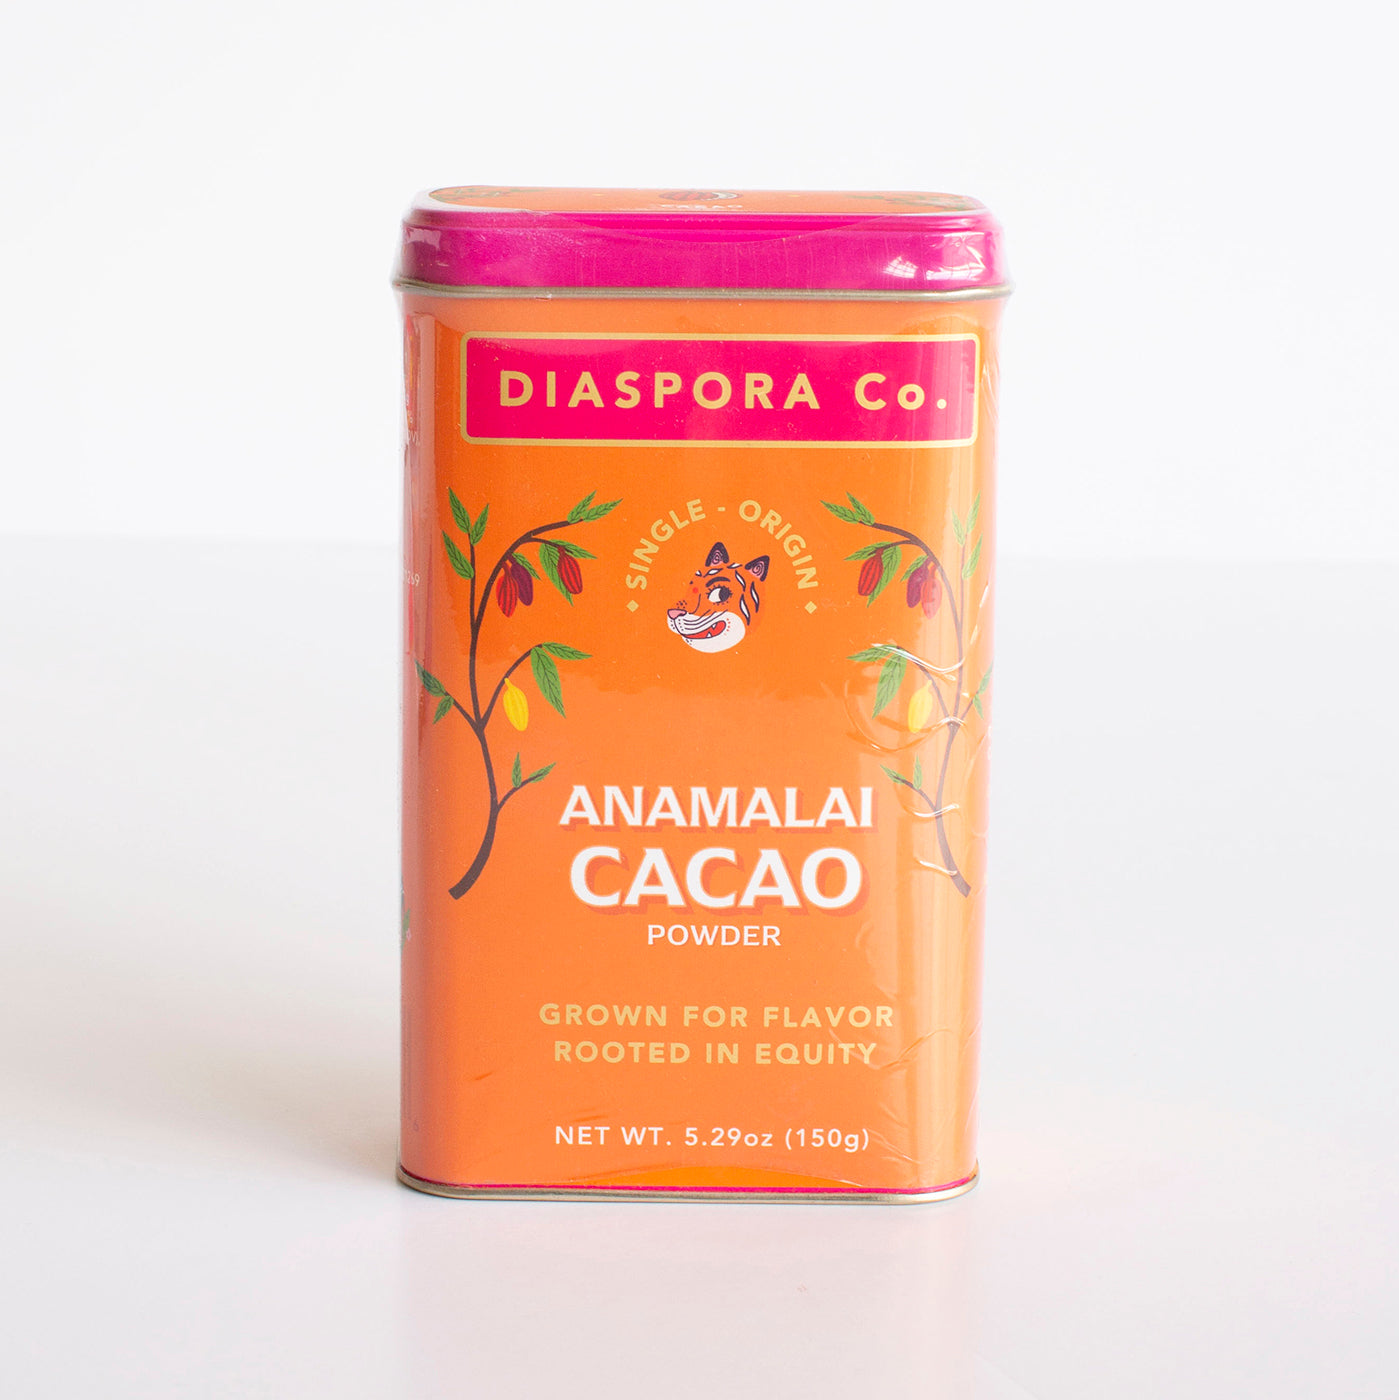 Cacao  Good Food